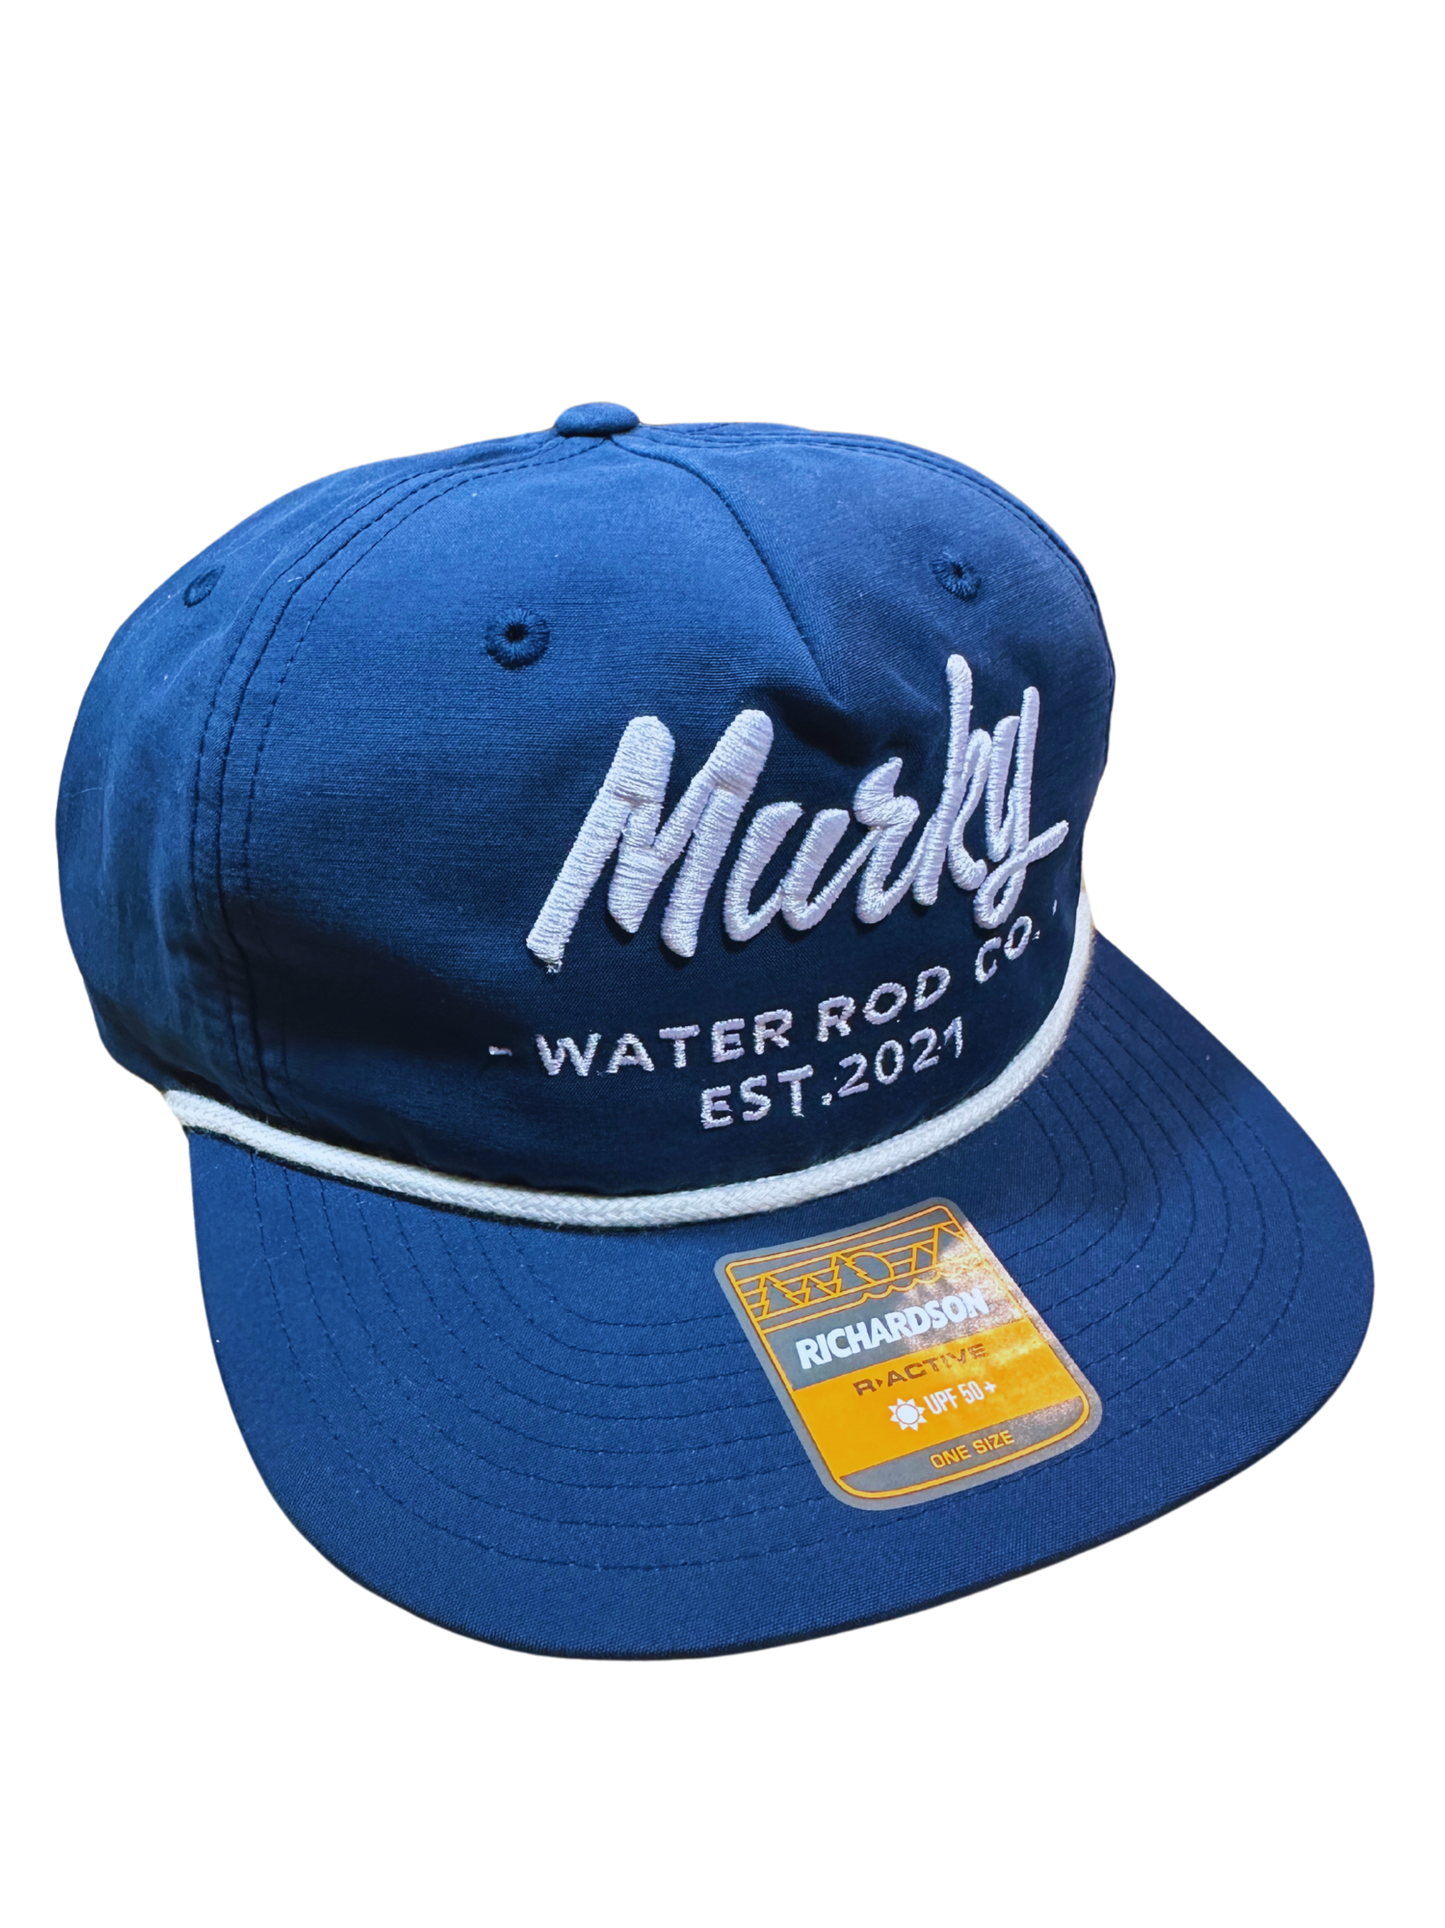 MURKY WATER ROD CO BLUE/WHITE CAP